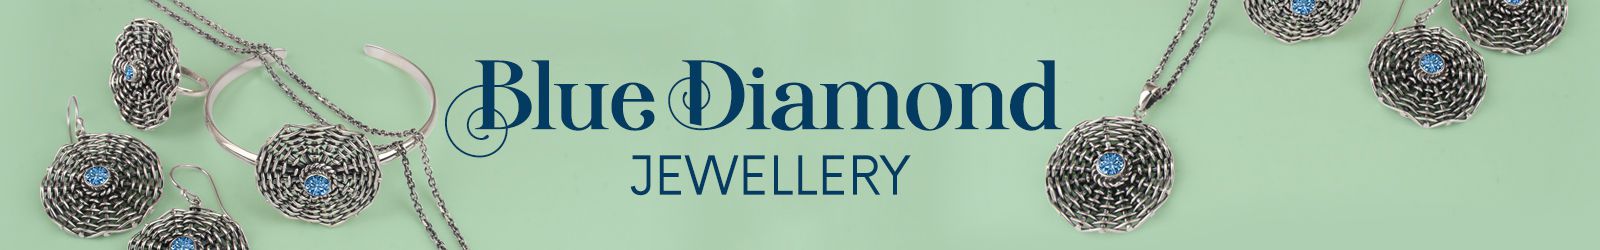 Silver Blue Diamond Jewelry Wholesale Supplier